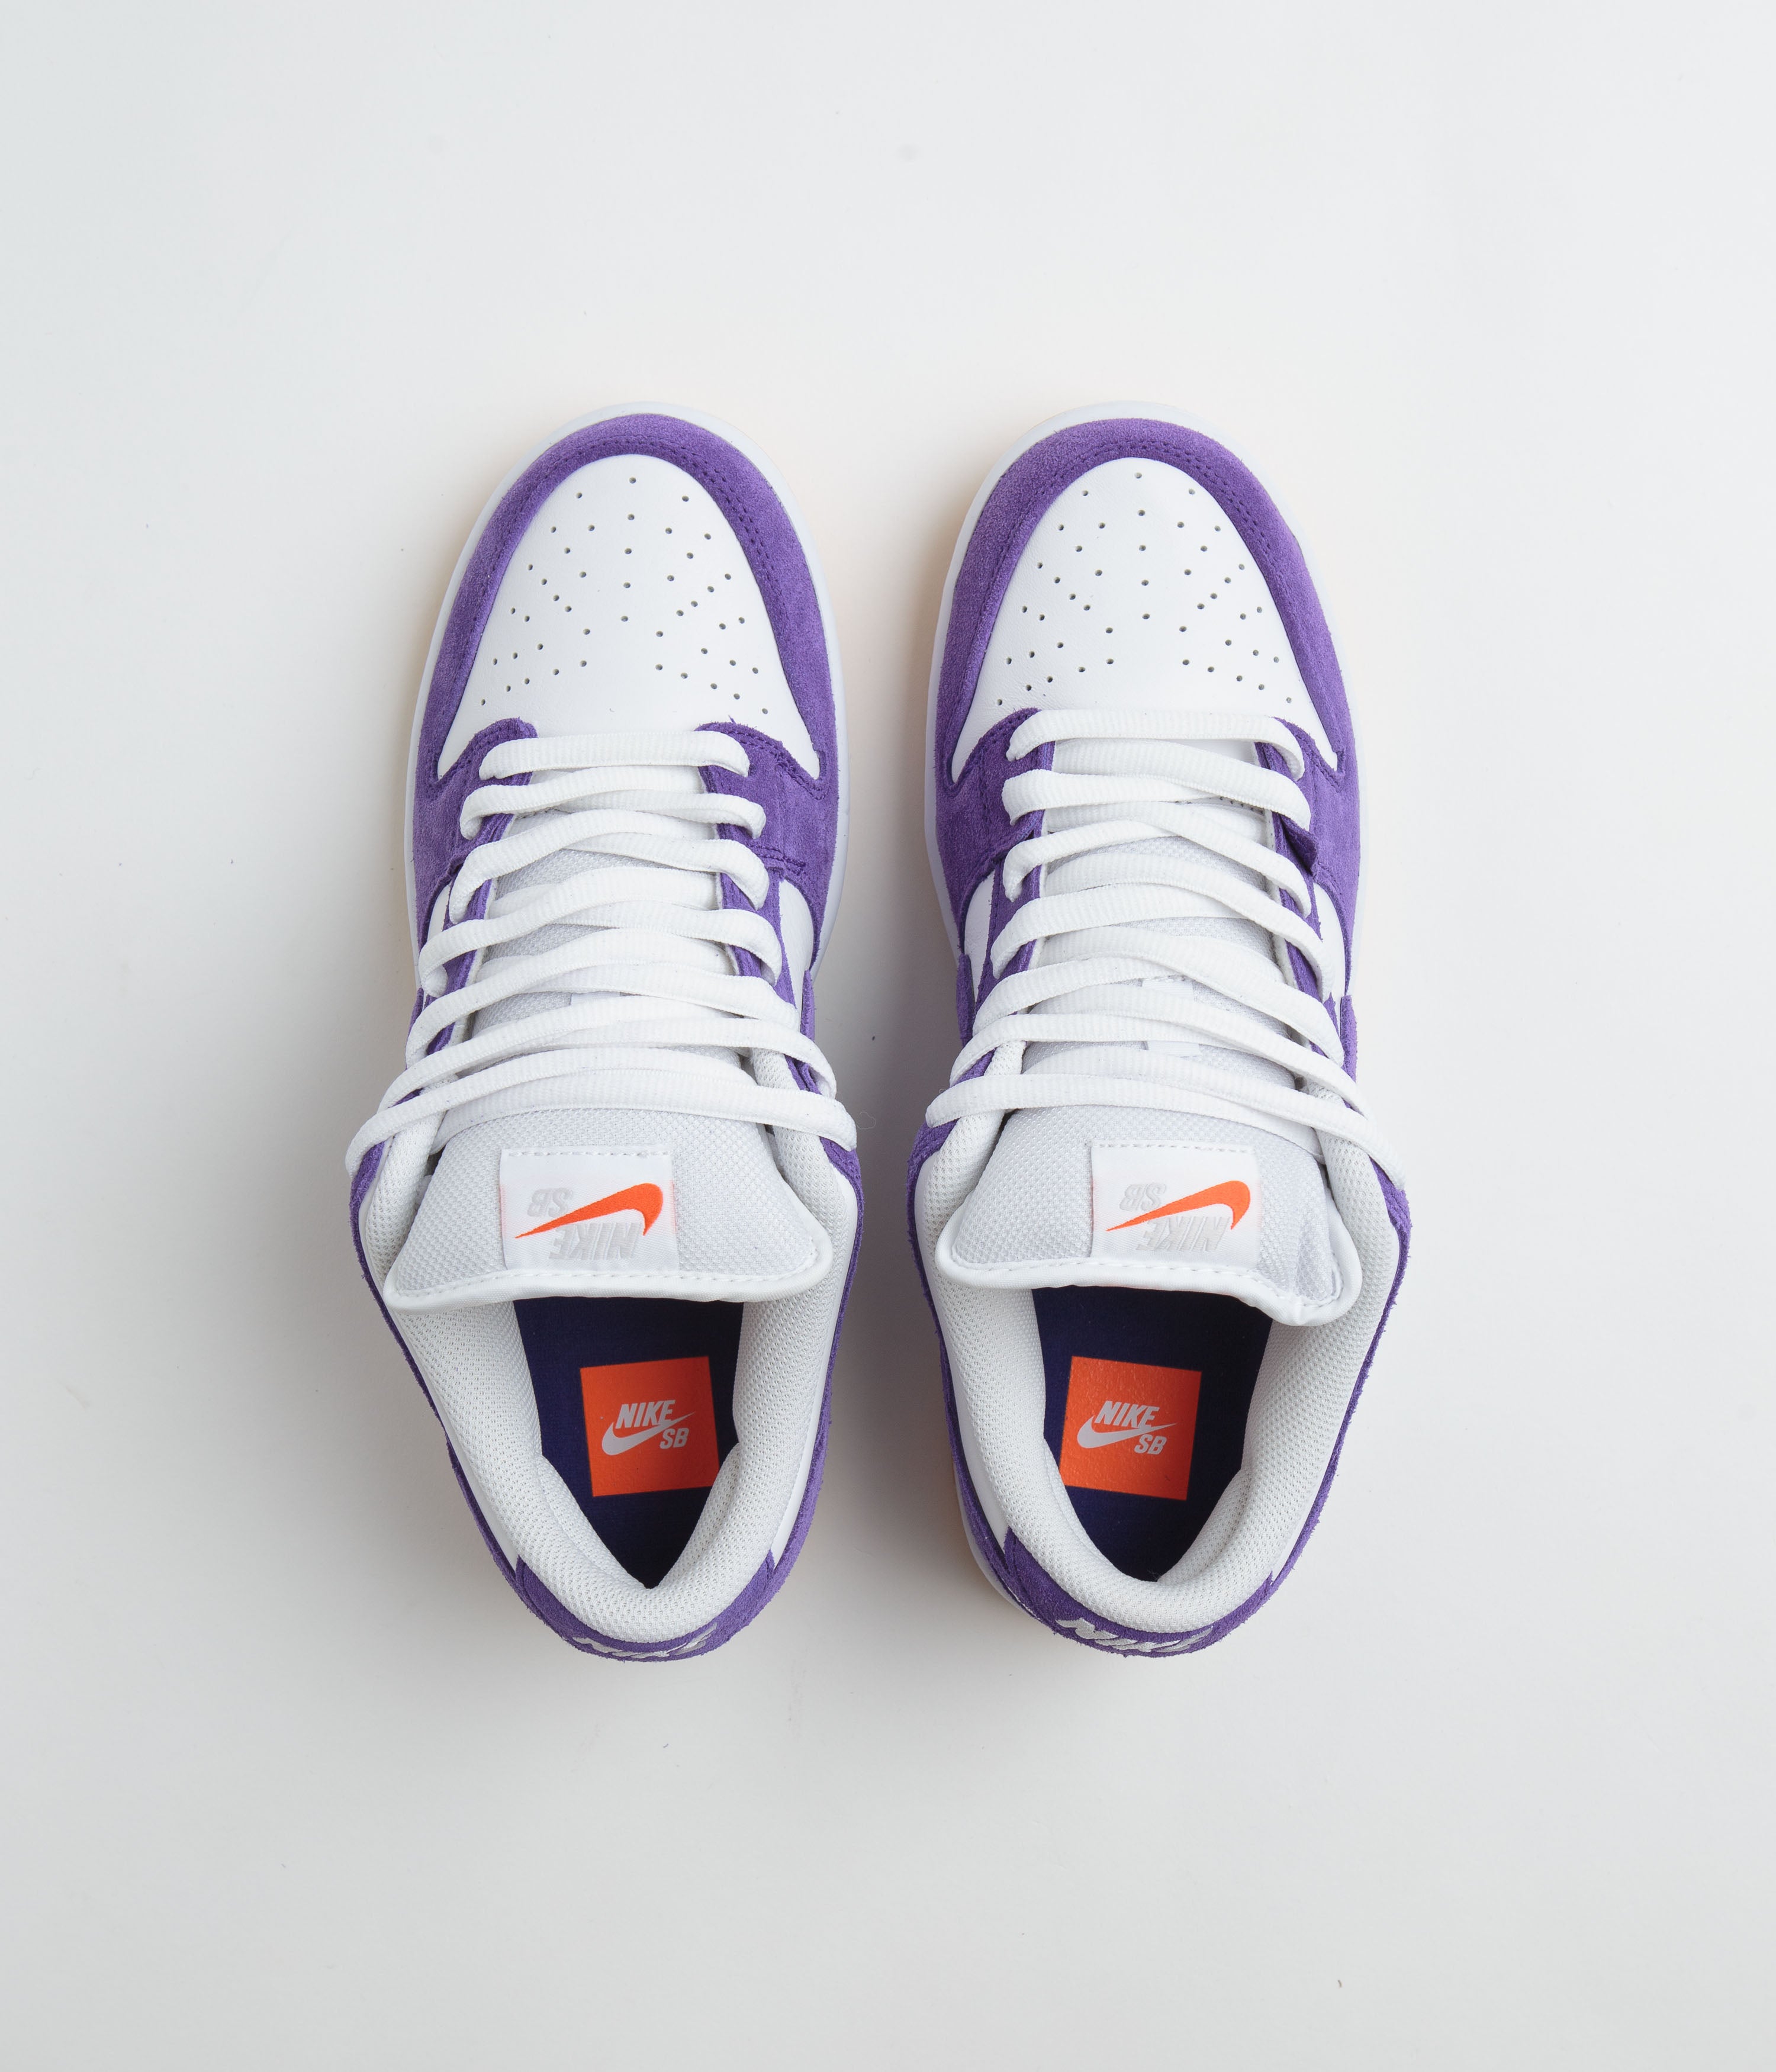 Nike SB Dunk Low Pro Shoes - Court Purple / Court Purple - White